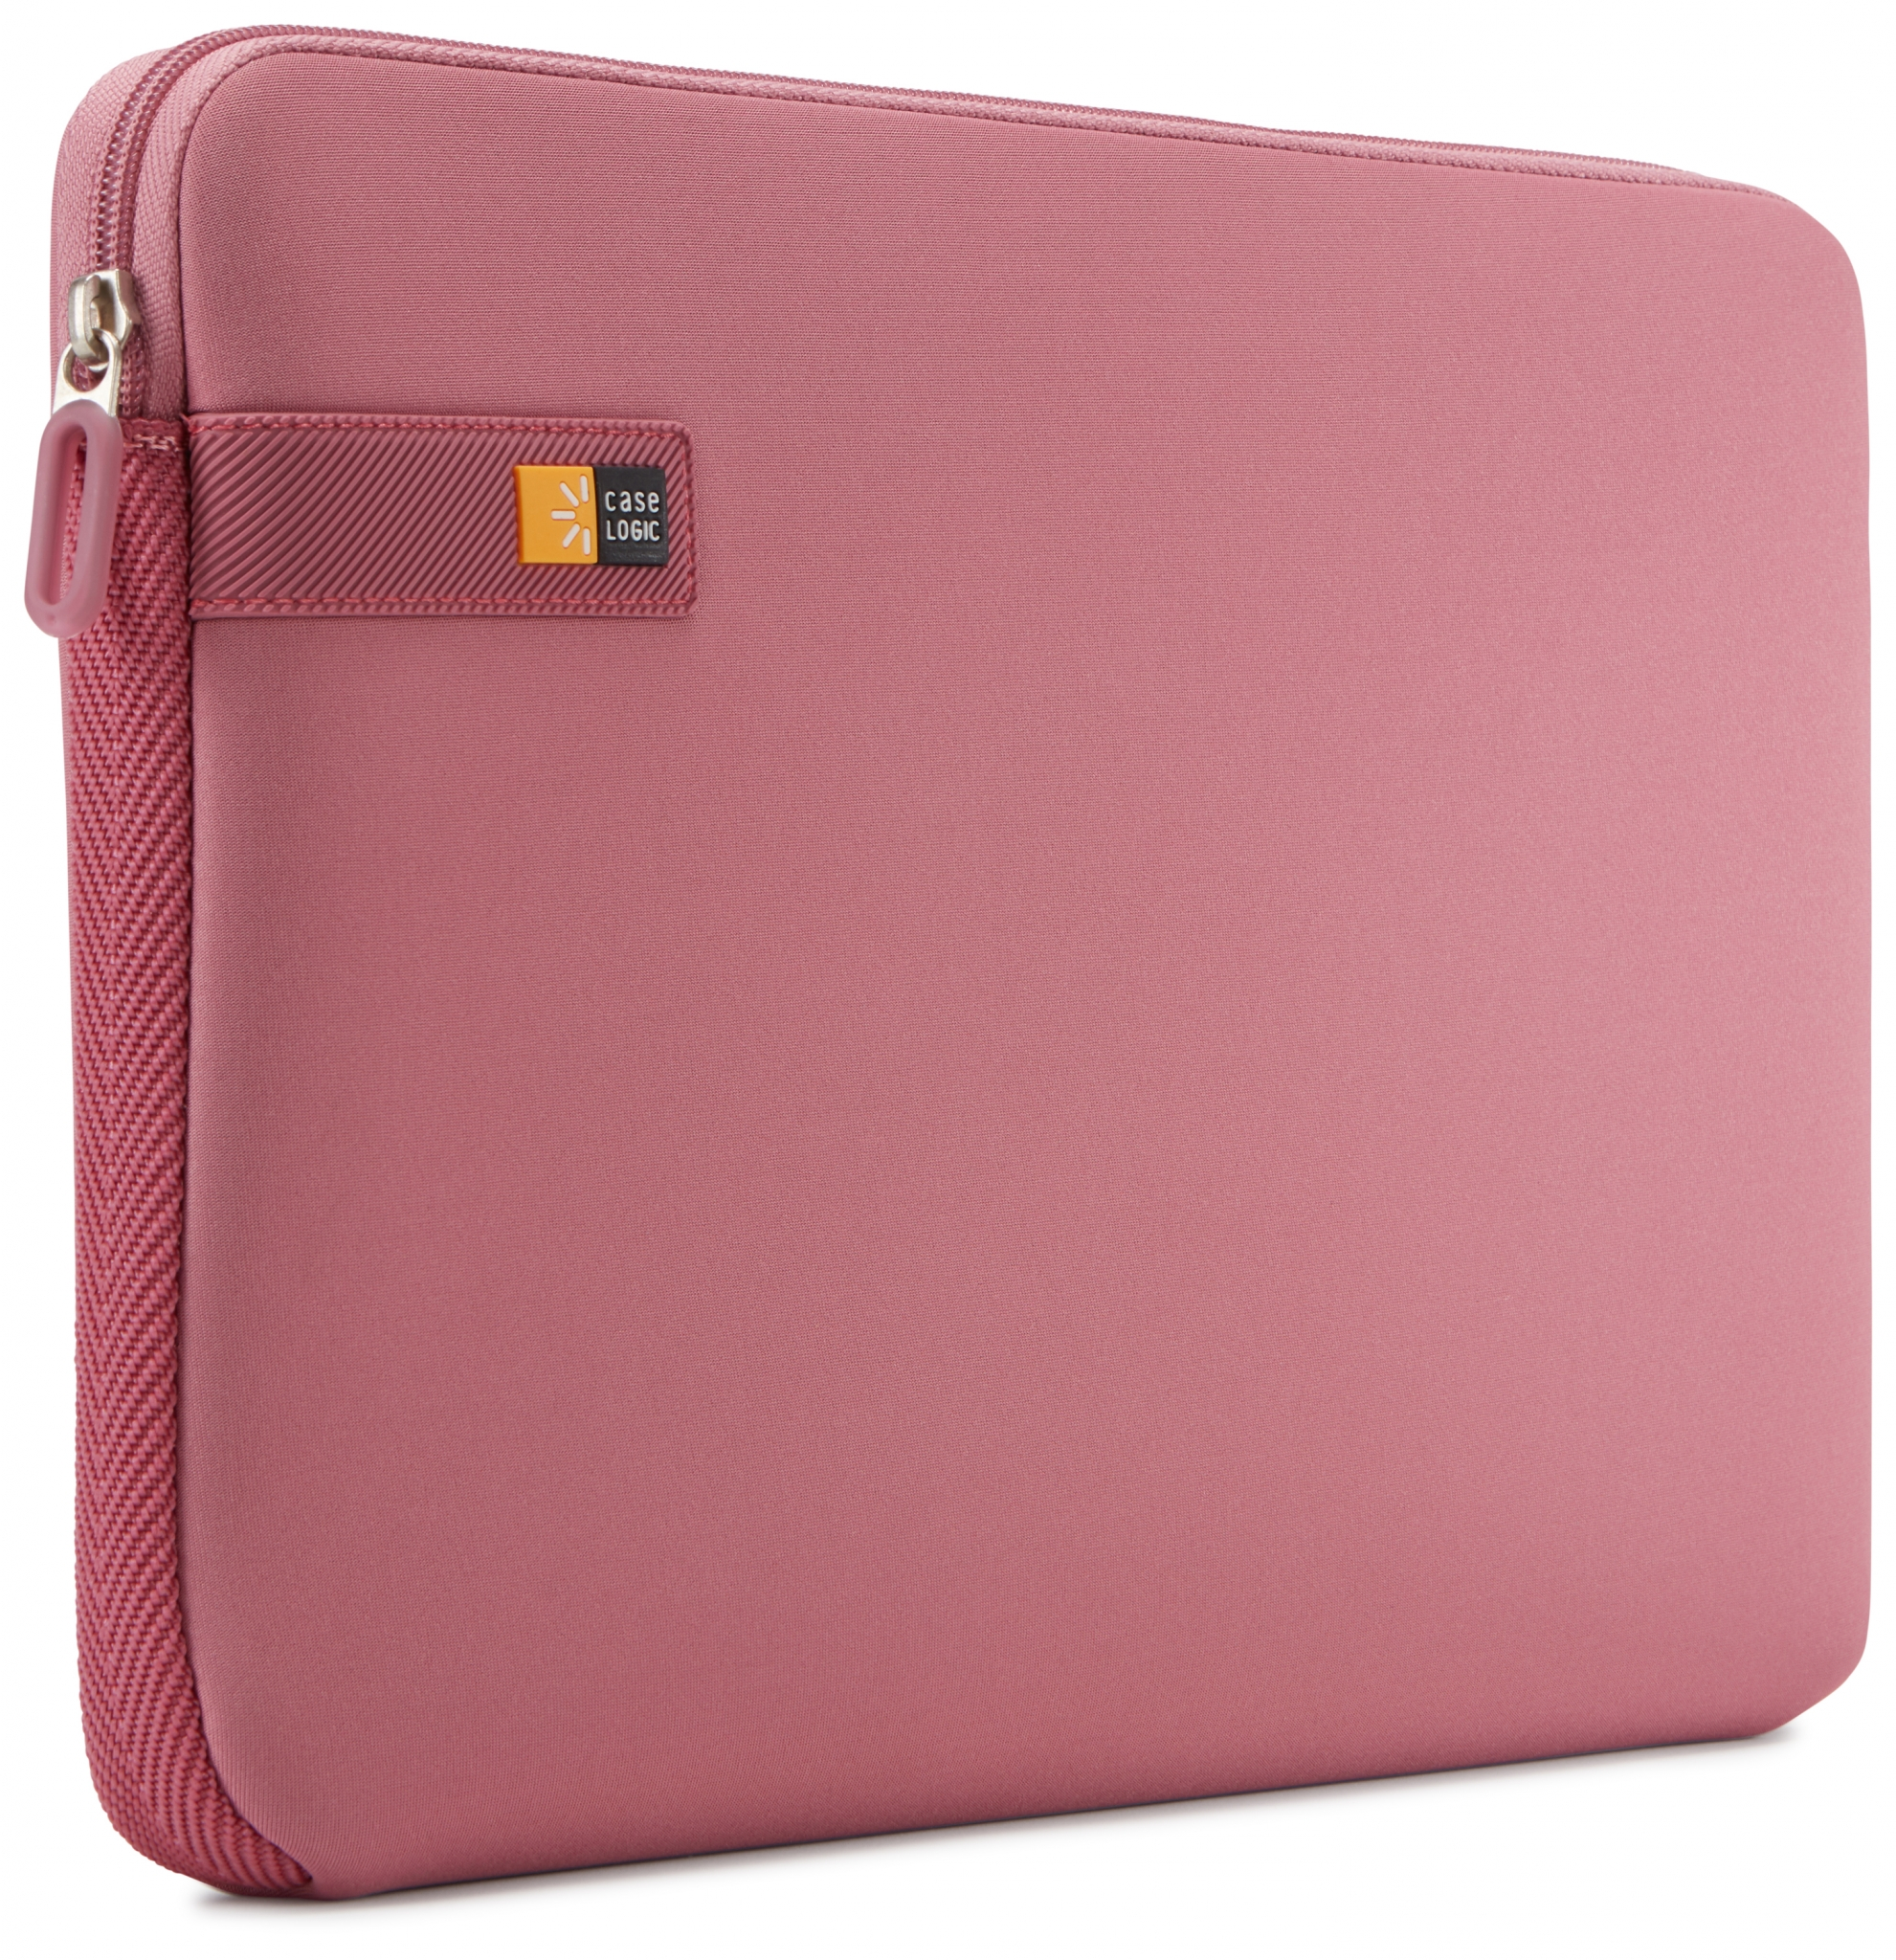 Sleeve Polyester Rose Notebooksleeve CASE Universal für Heather LOGIC EVA, | Laps